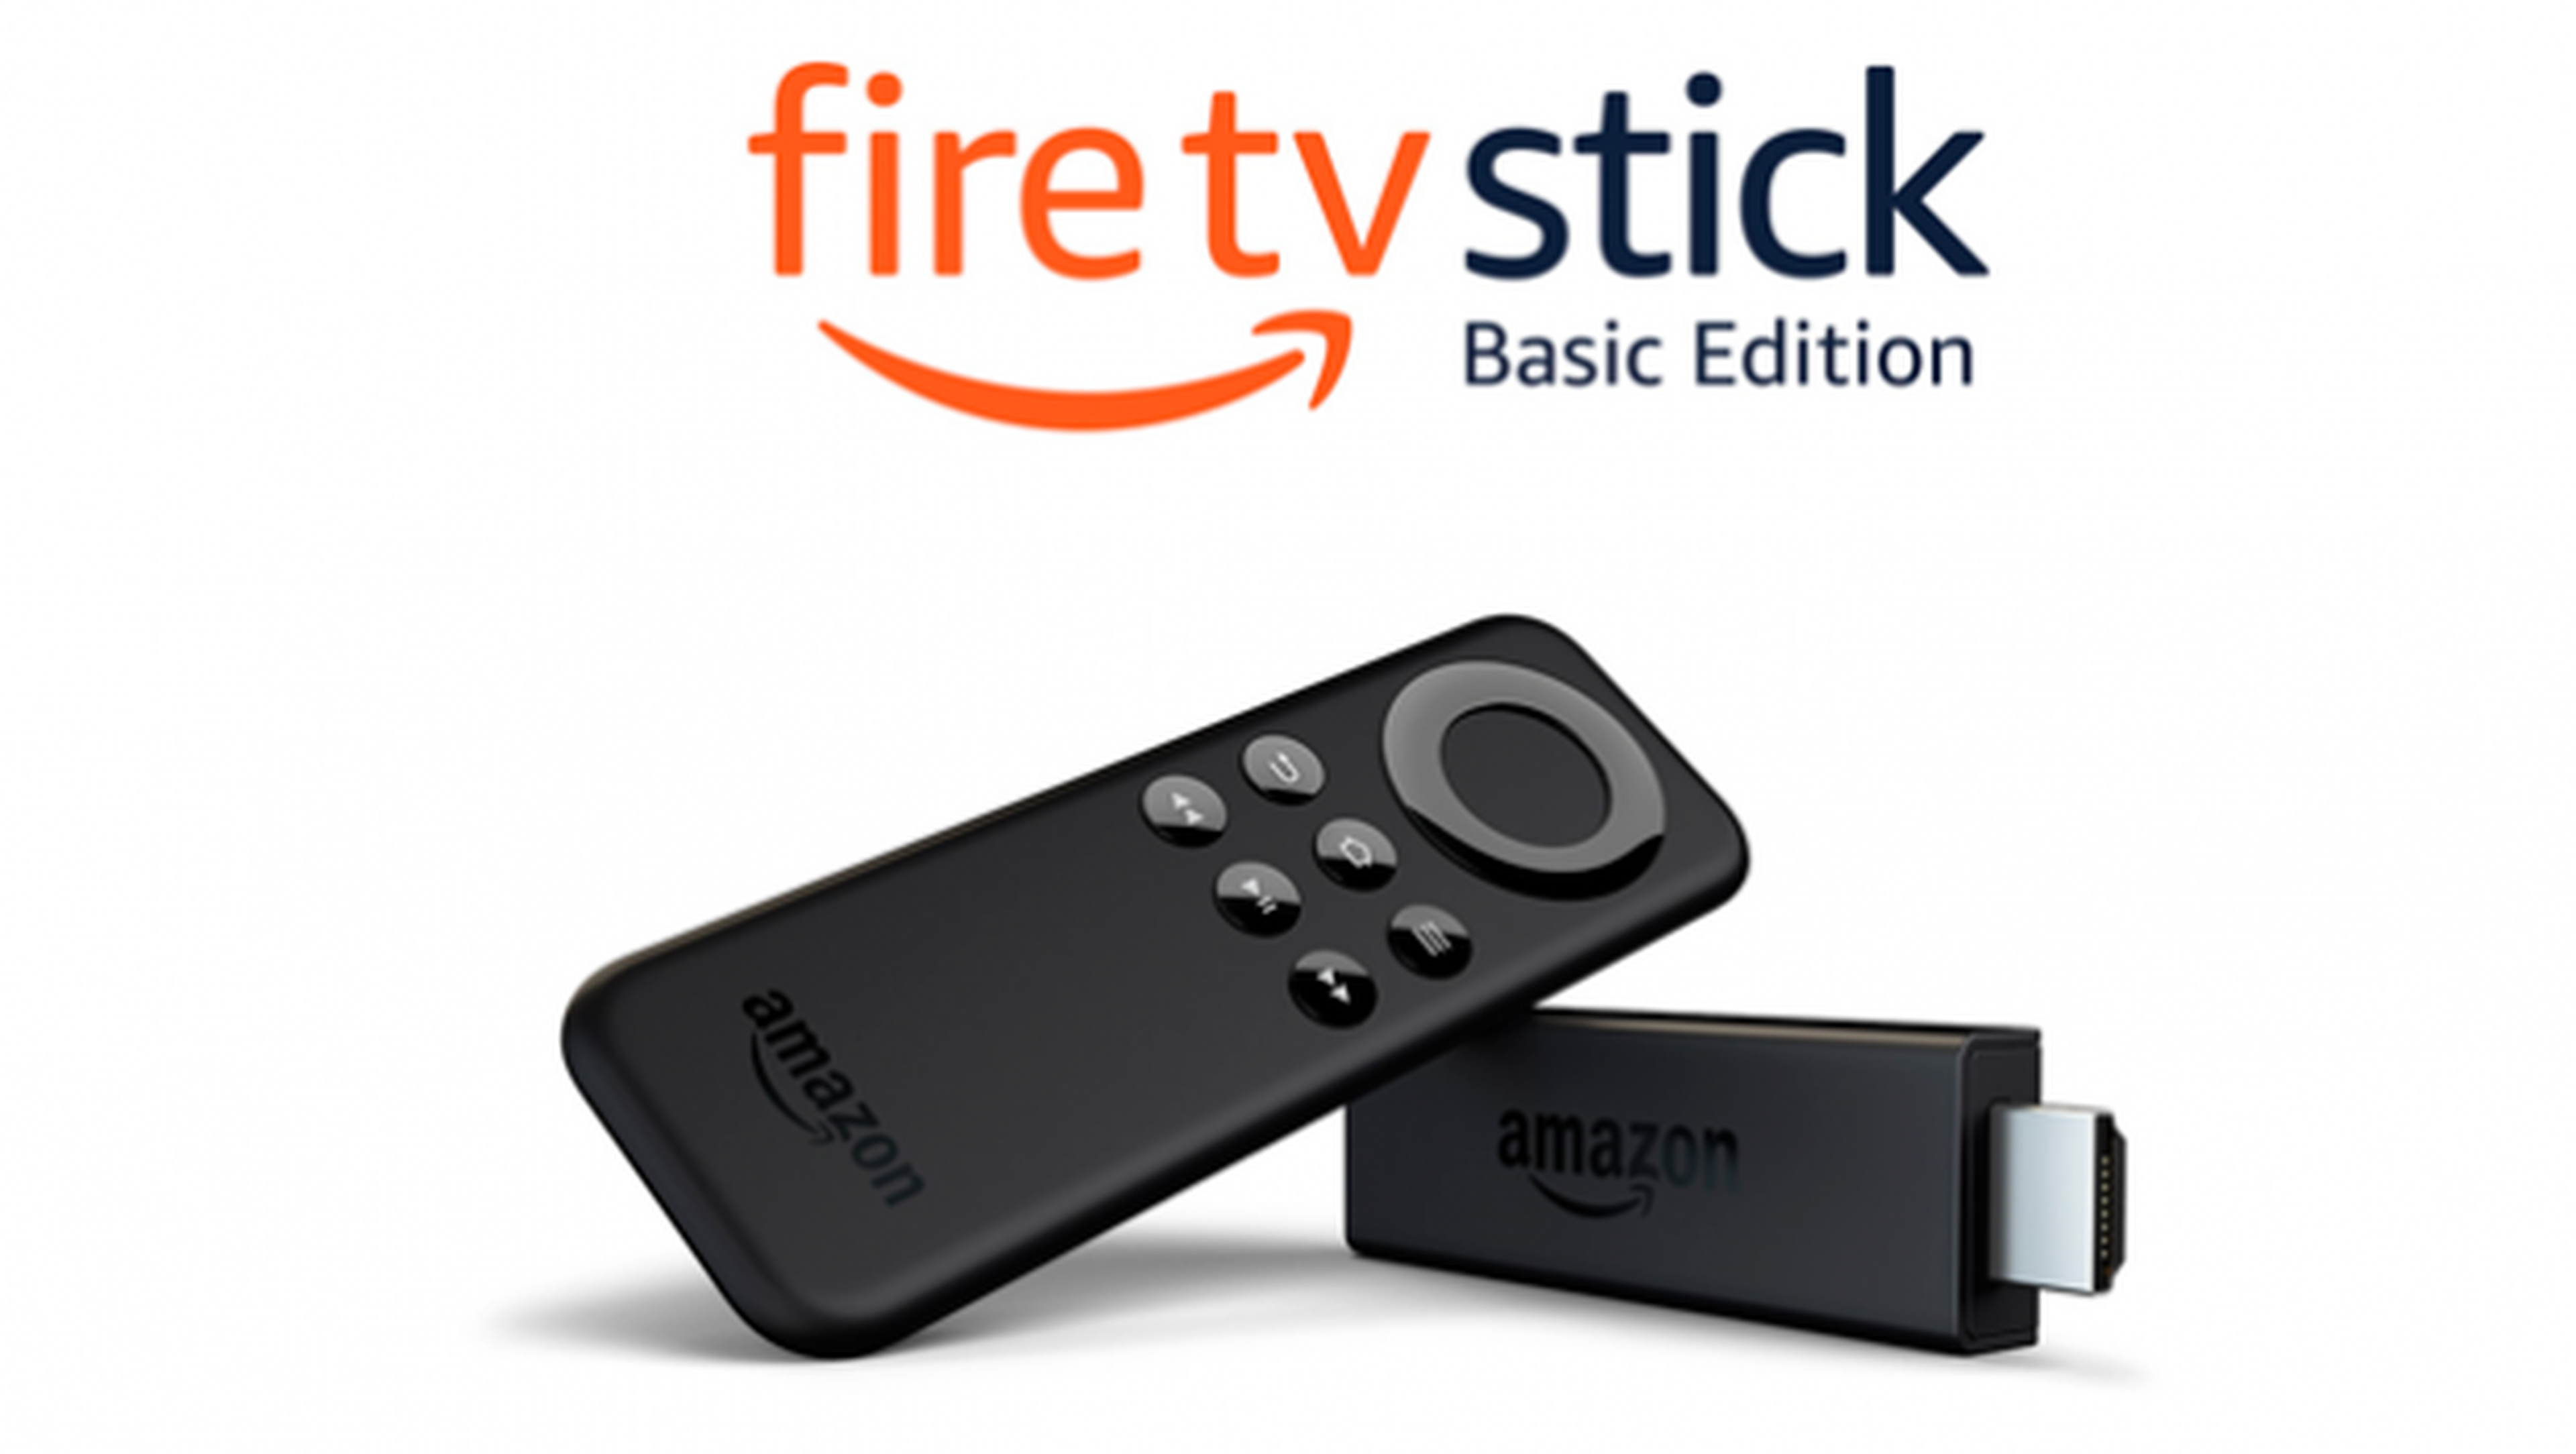 Amazon Fire TV Stick regalo San Valentín para tu novio